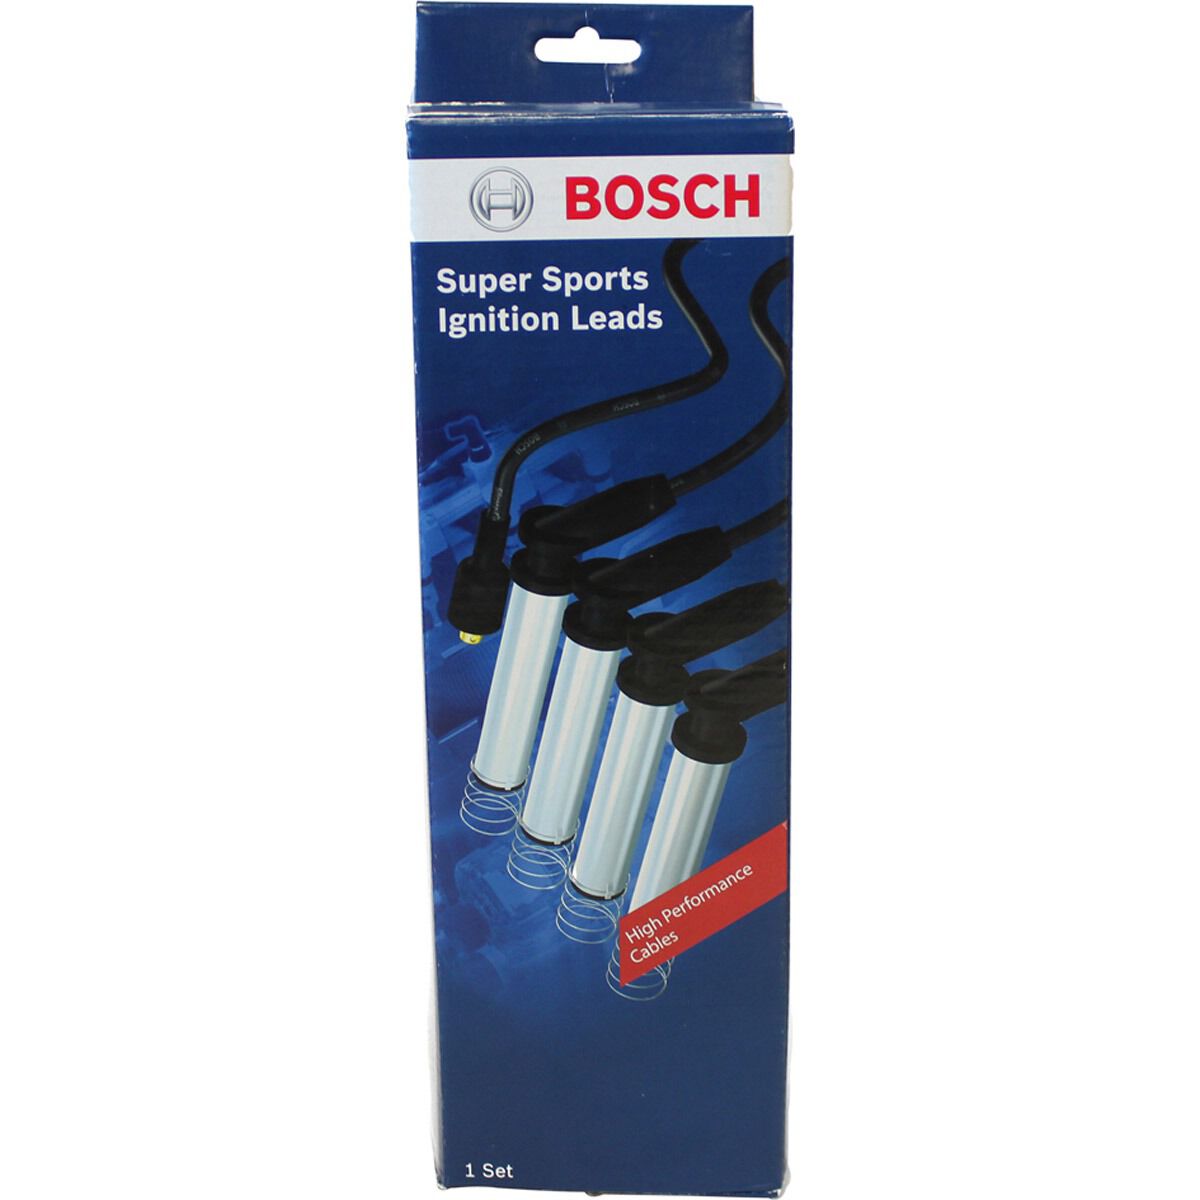 Bosch Super Sports Ignition Lead Kit B6000I, , scaau_hi-res